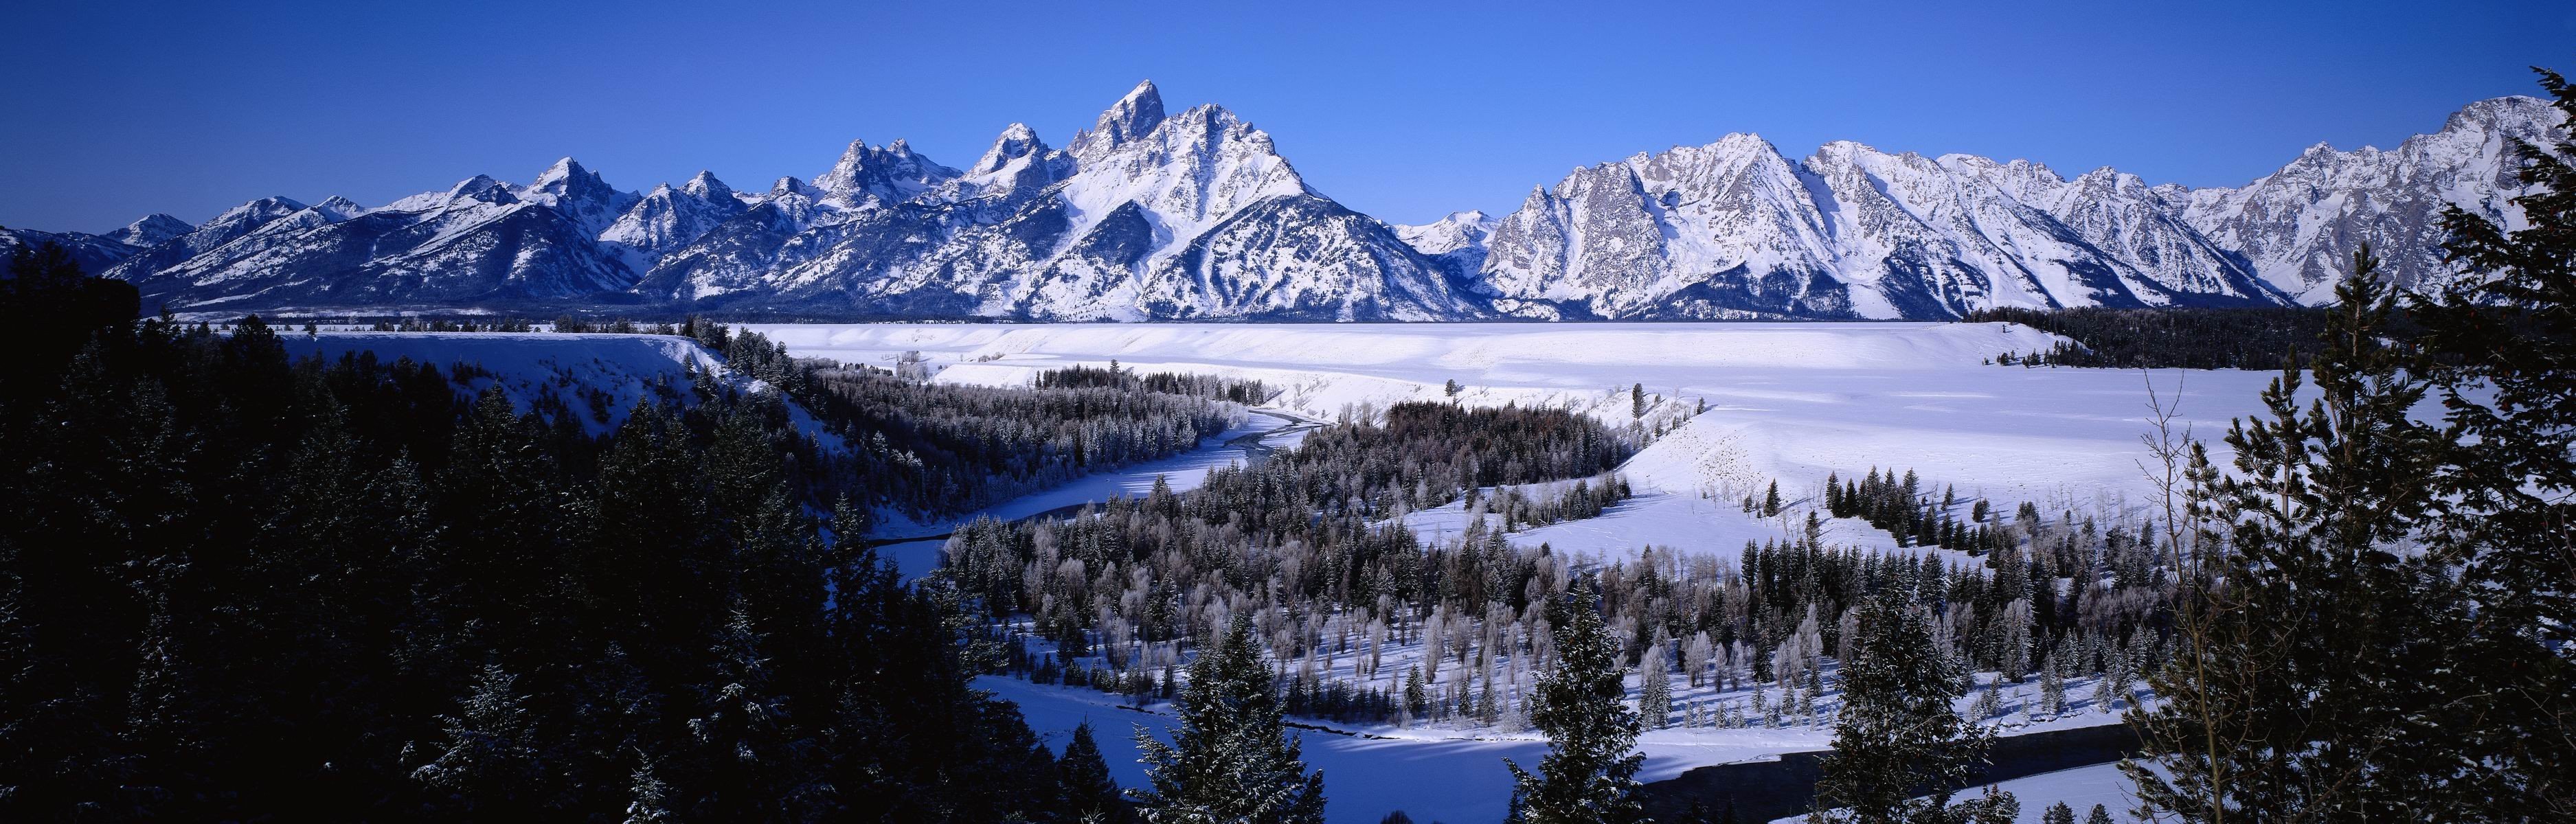 mountains, Landscape, Nature, Mountain, Winter, River Wallpaper